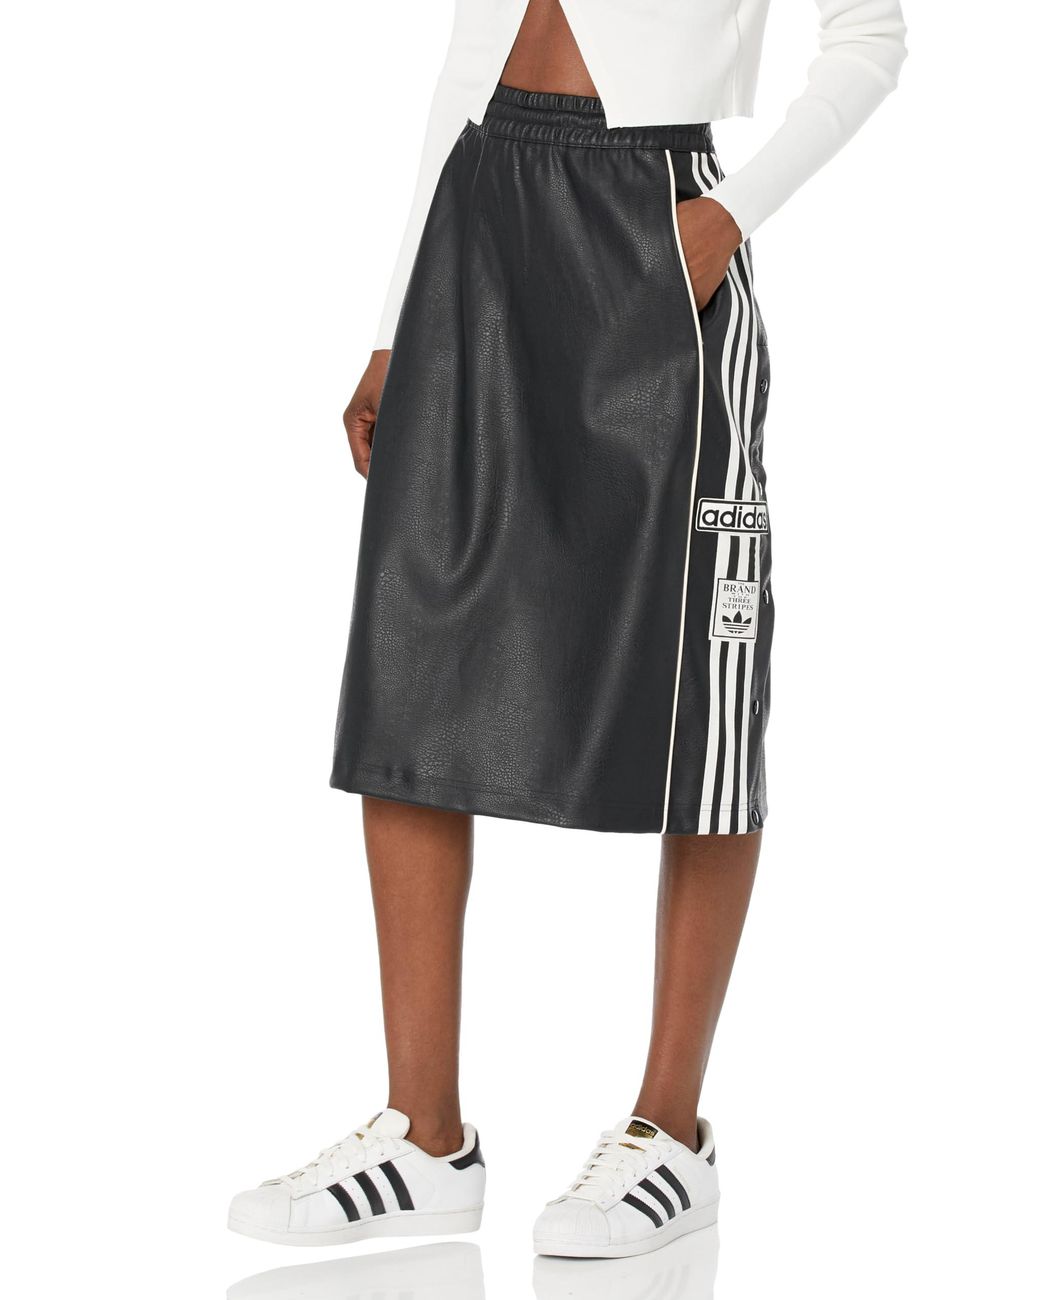 adidas Originals Womens Adibreak Skirt Black Medium | Lyst